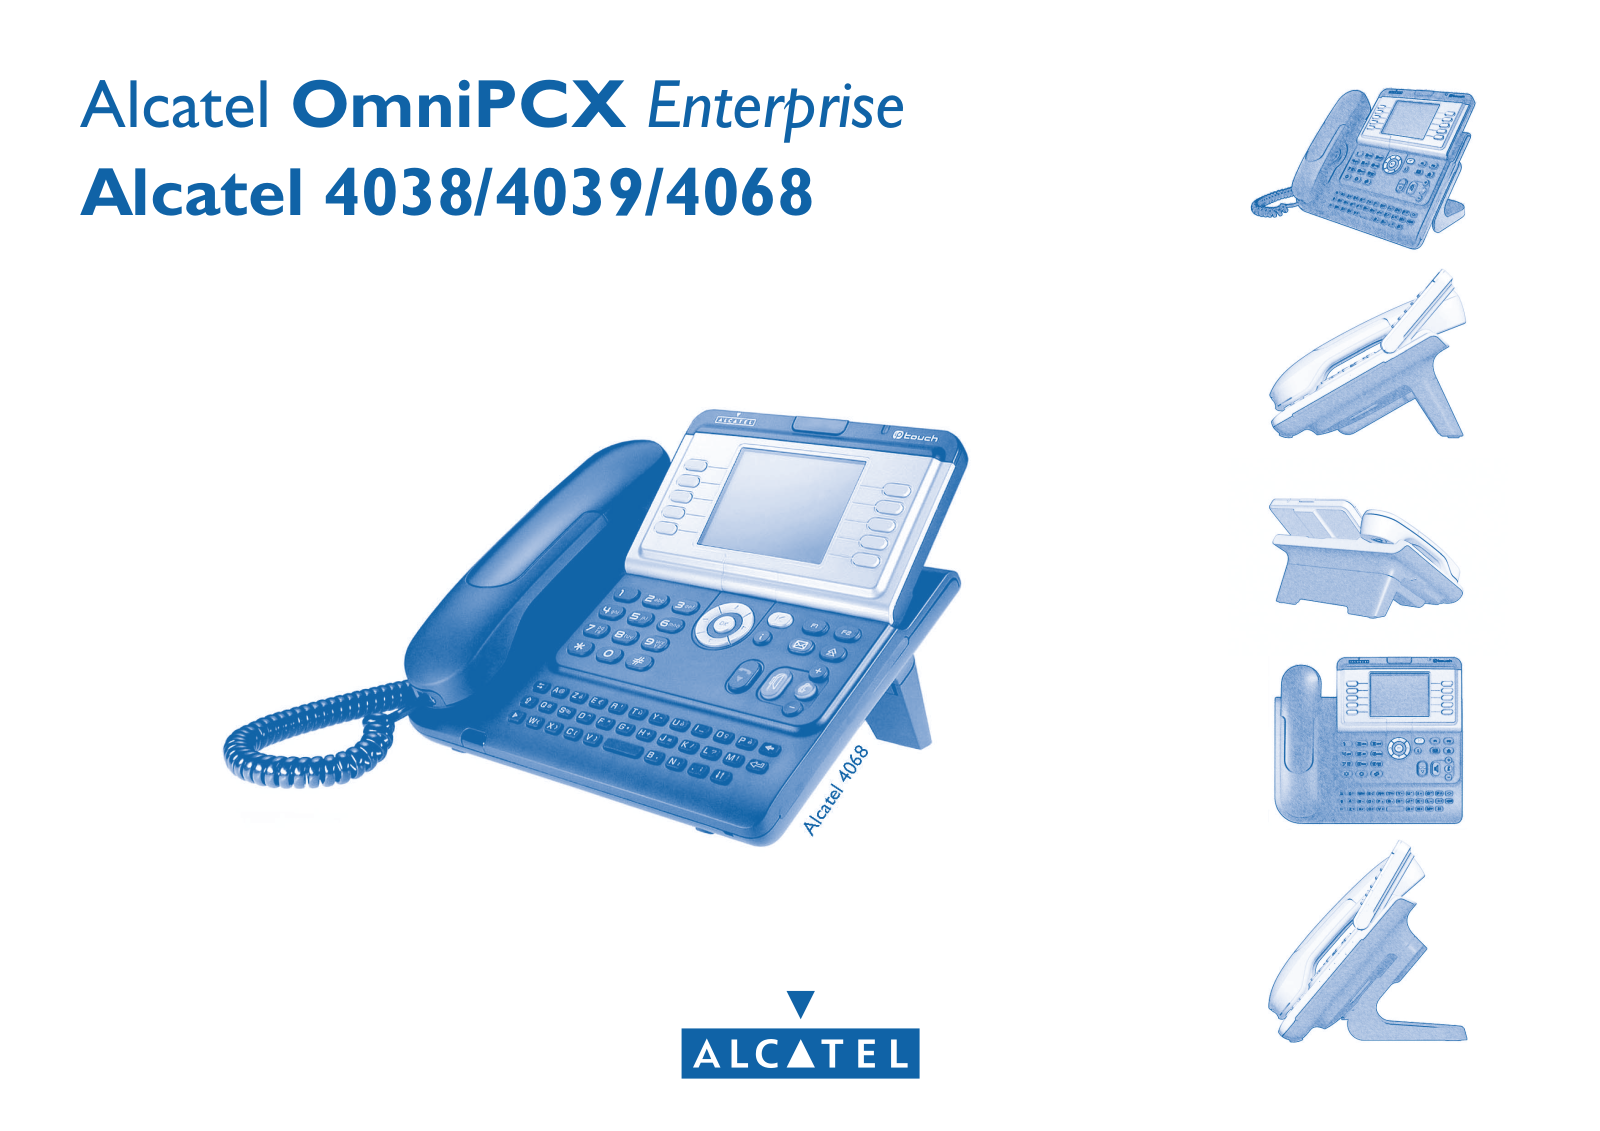 Alcatel-lucent 4068 OMNIPCX ENTREPRISE, 4038 OMNIPCX ENTREPRISE, 4039 OMNIPCX ENTREPRISE Manual